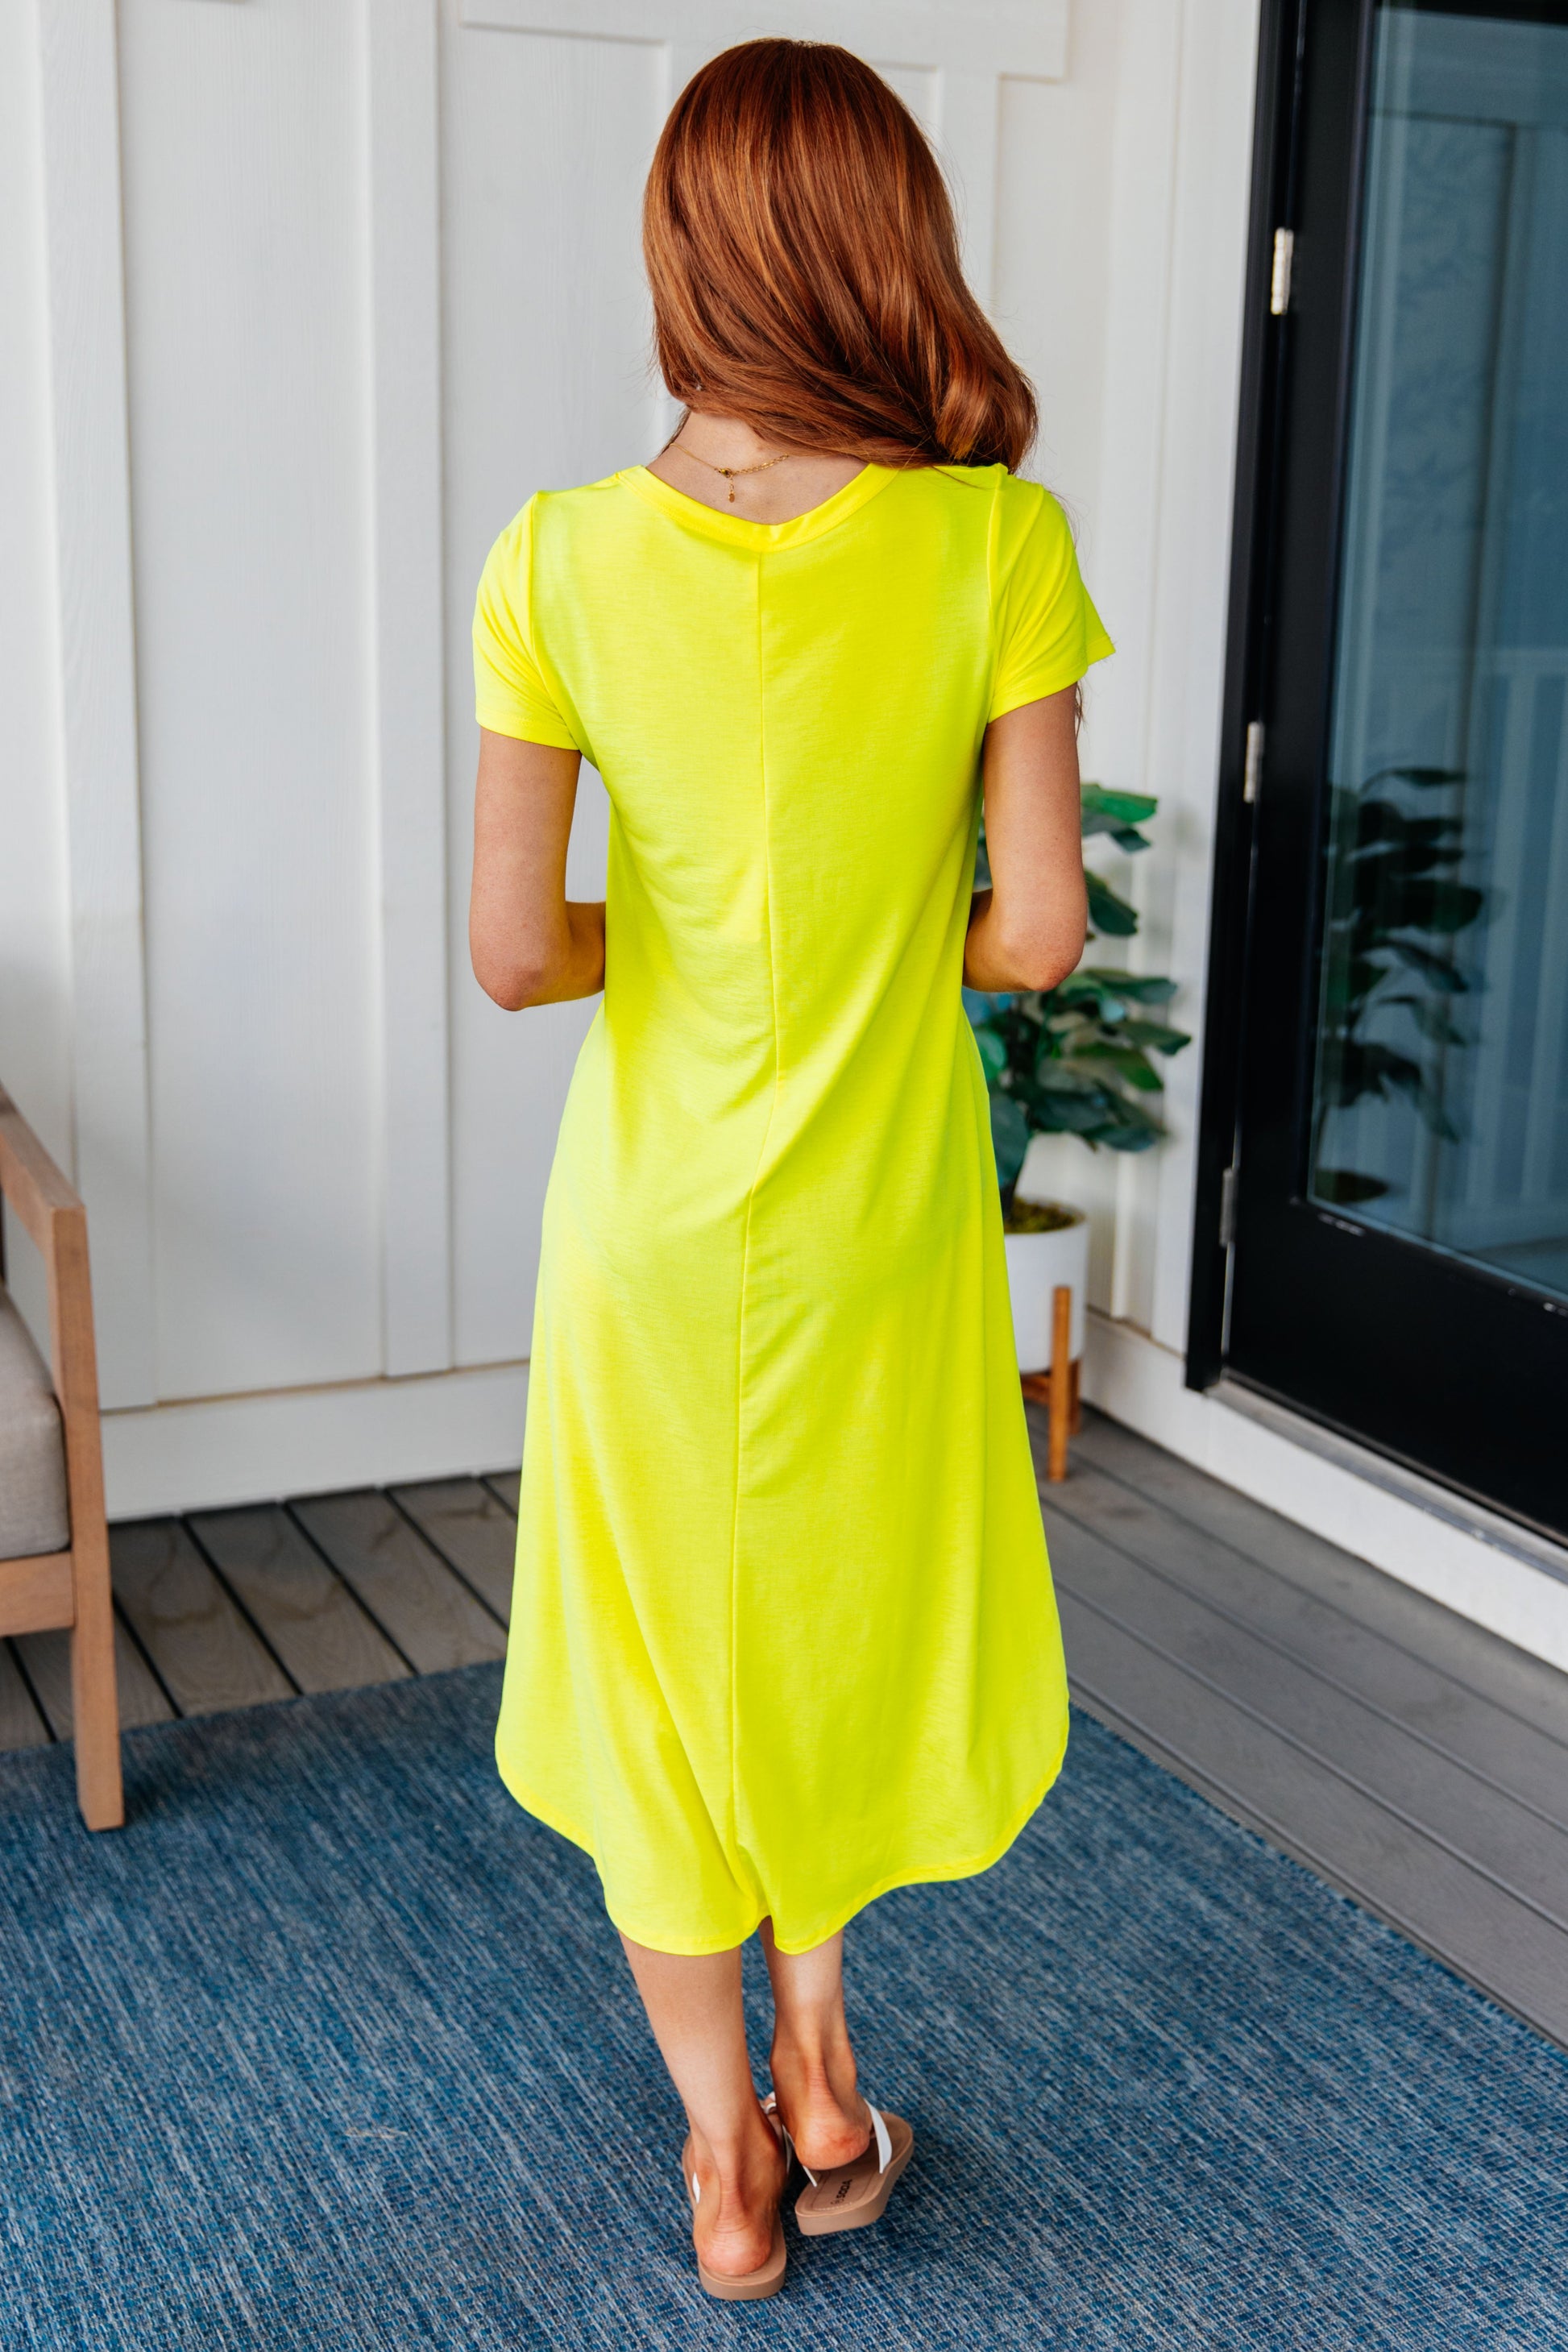 Dolman Sleeve Maxi Dress in Neon Yellow - Southern Divas Boutique